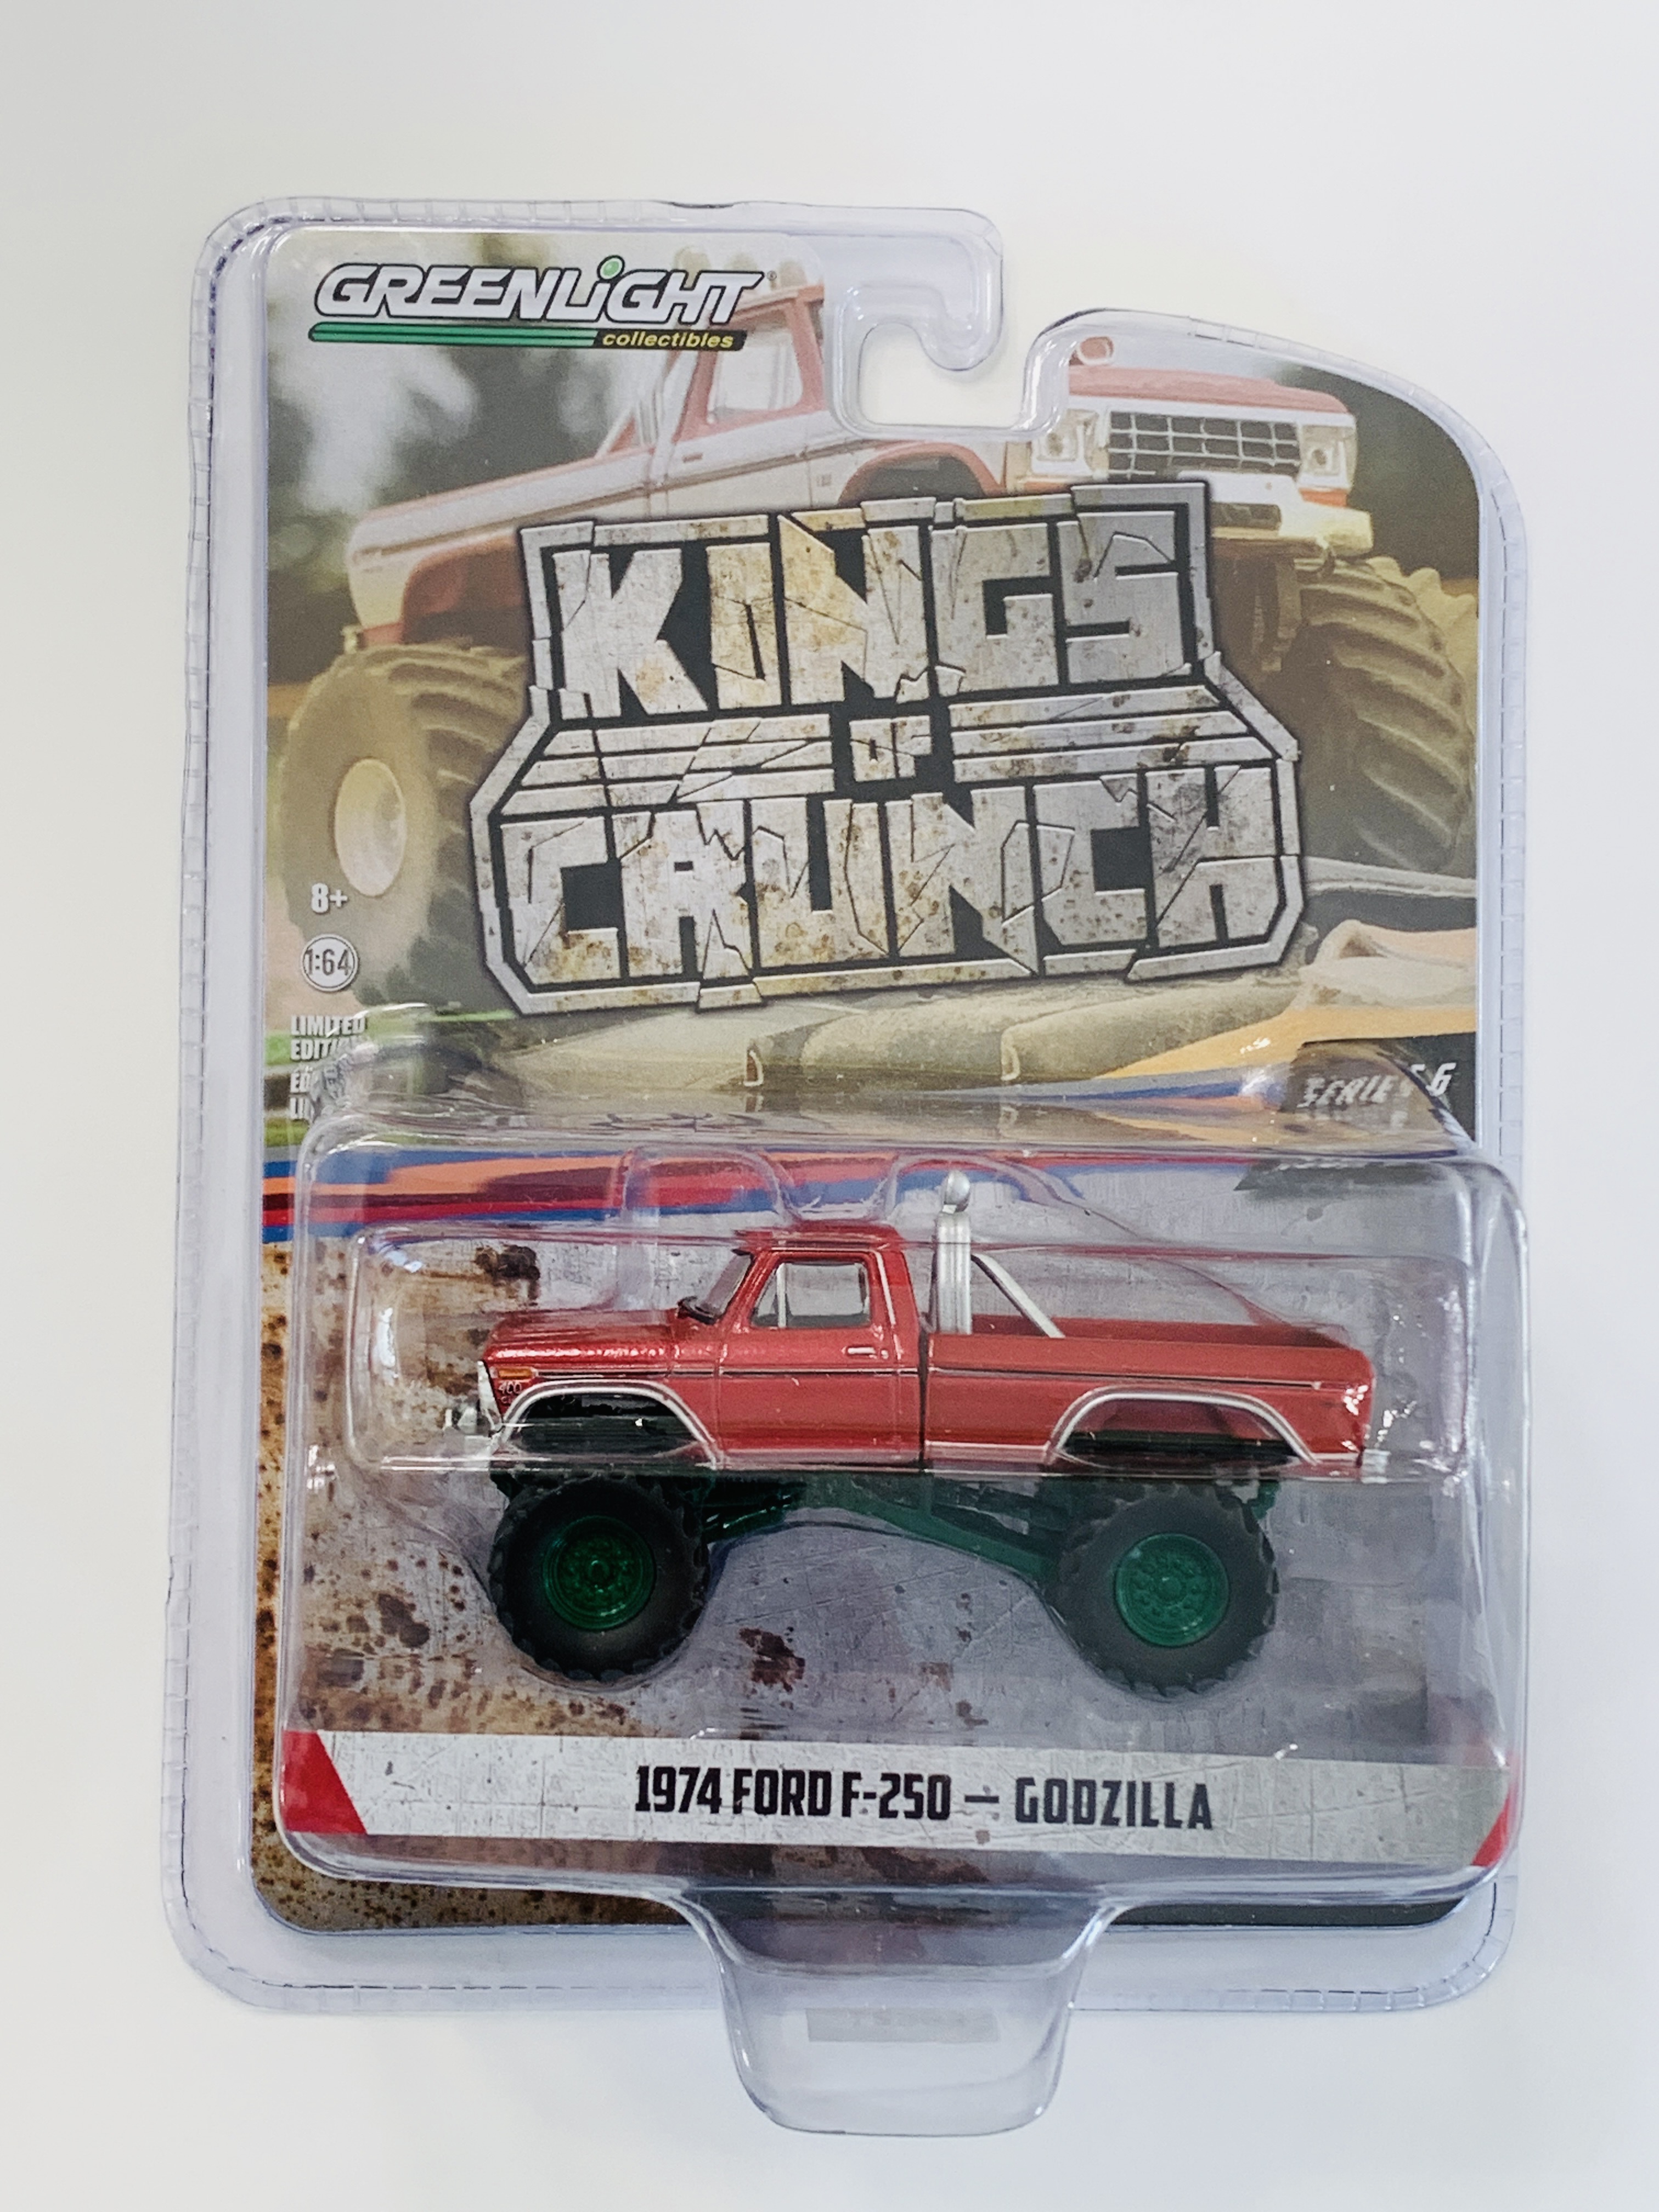 Greenlight Kings Of Crunch 1974 Ford F-250 - Godzilla Green Machine